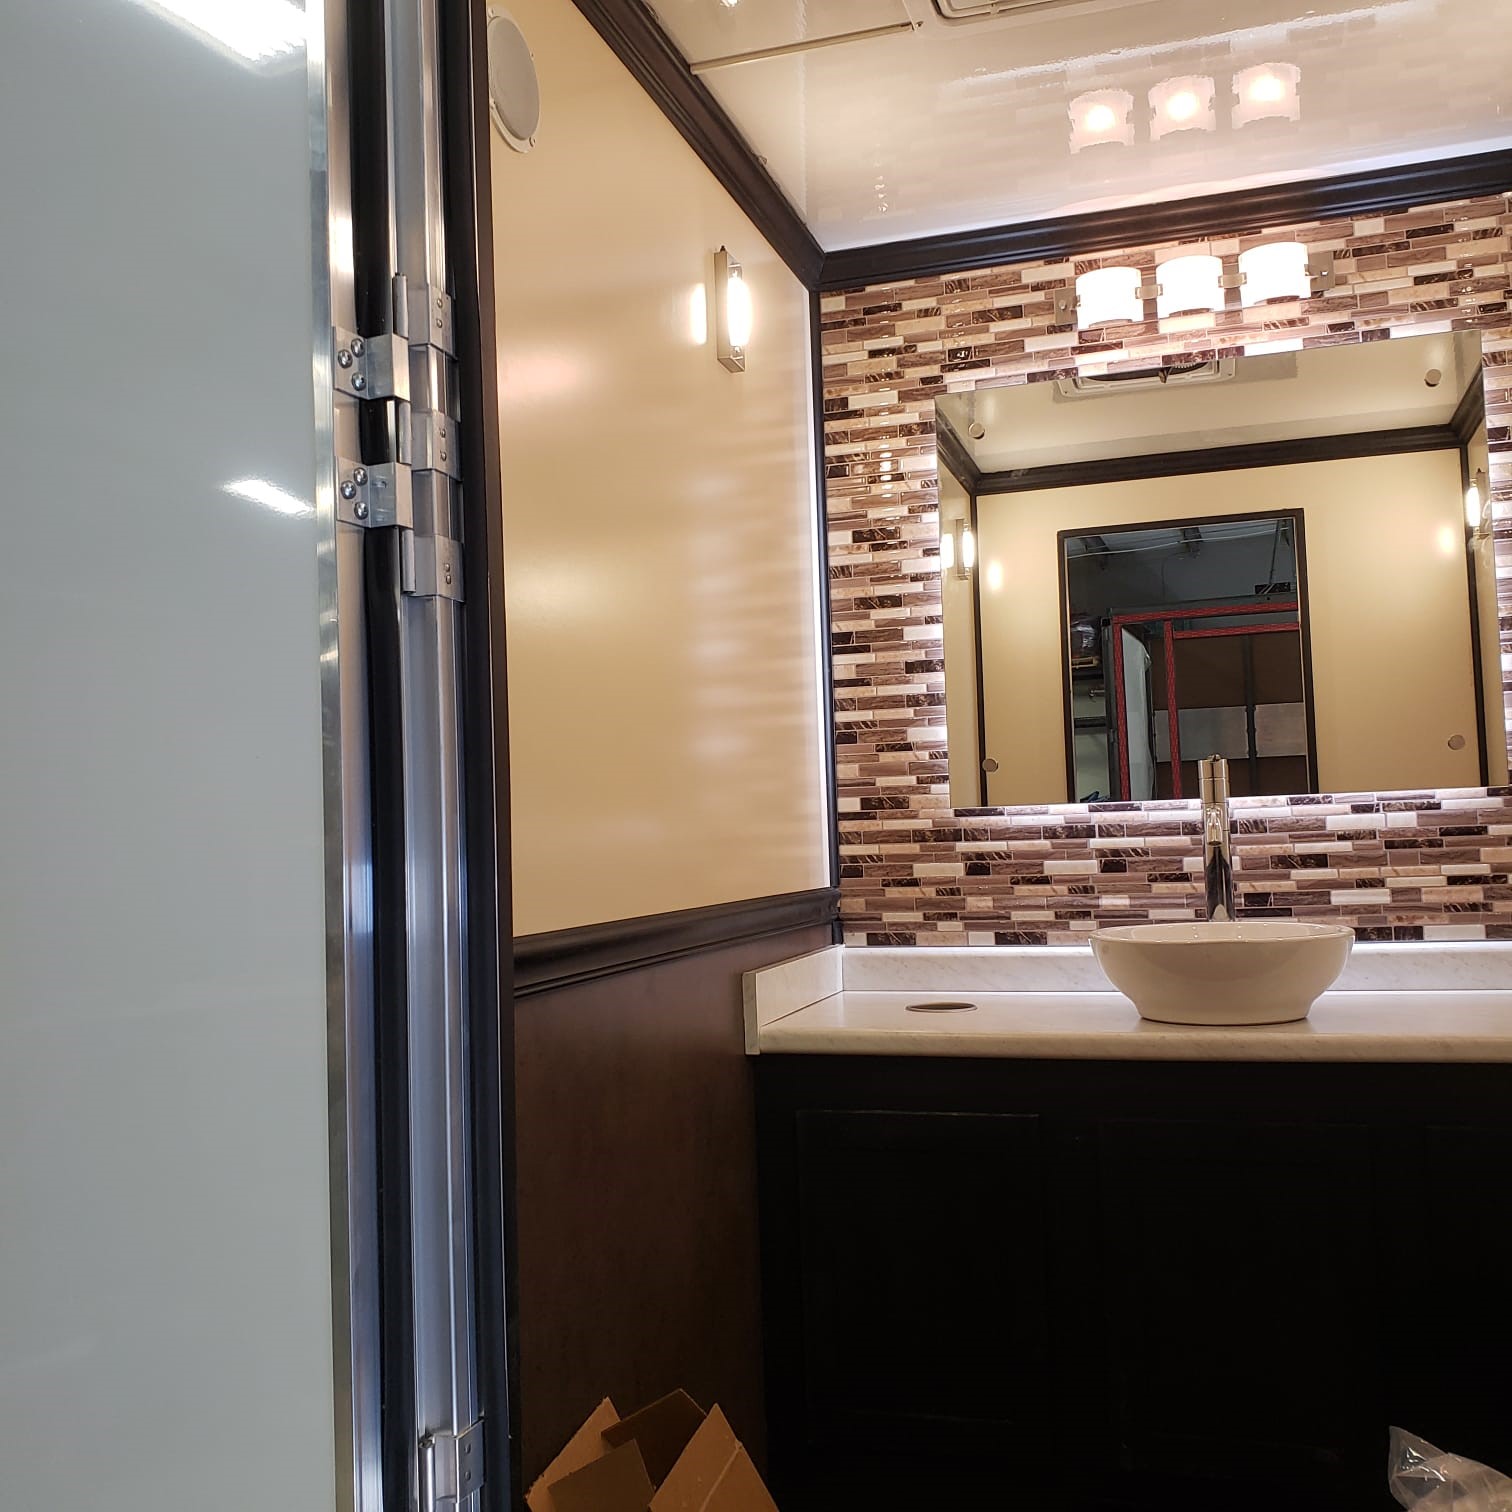 interior view of luxury bathroom trailers